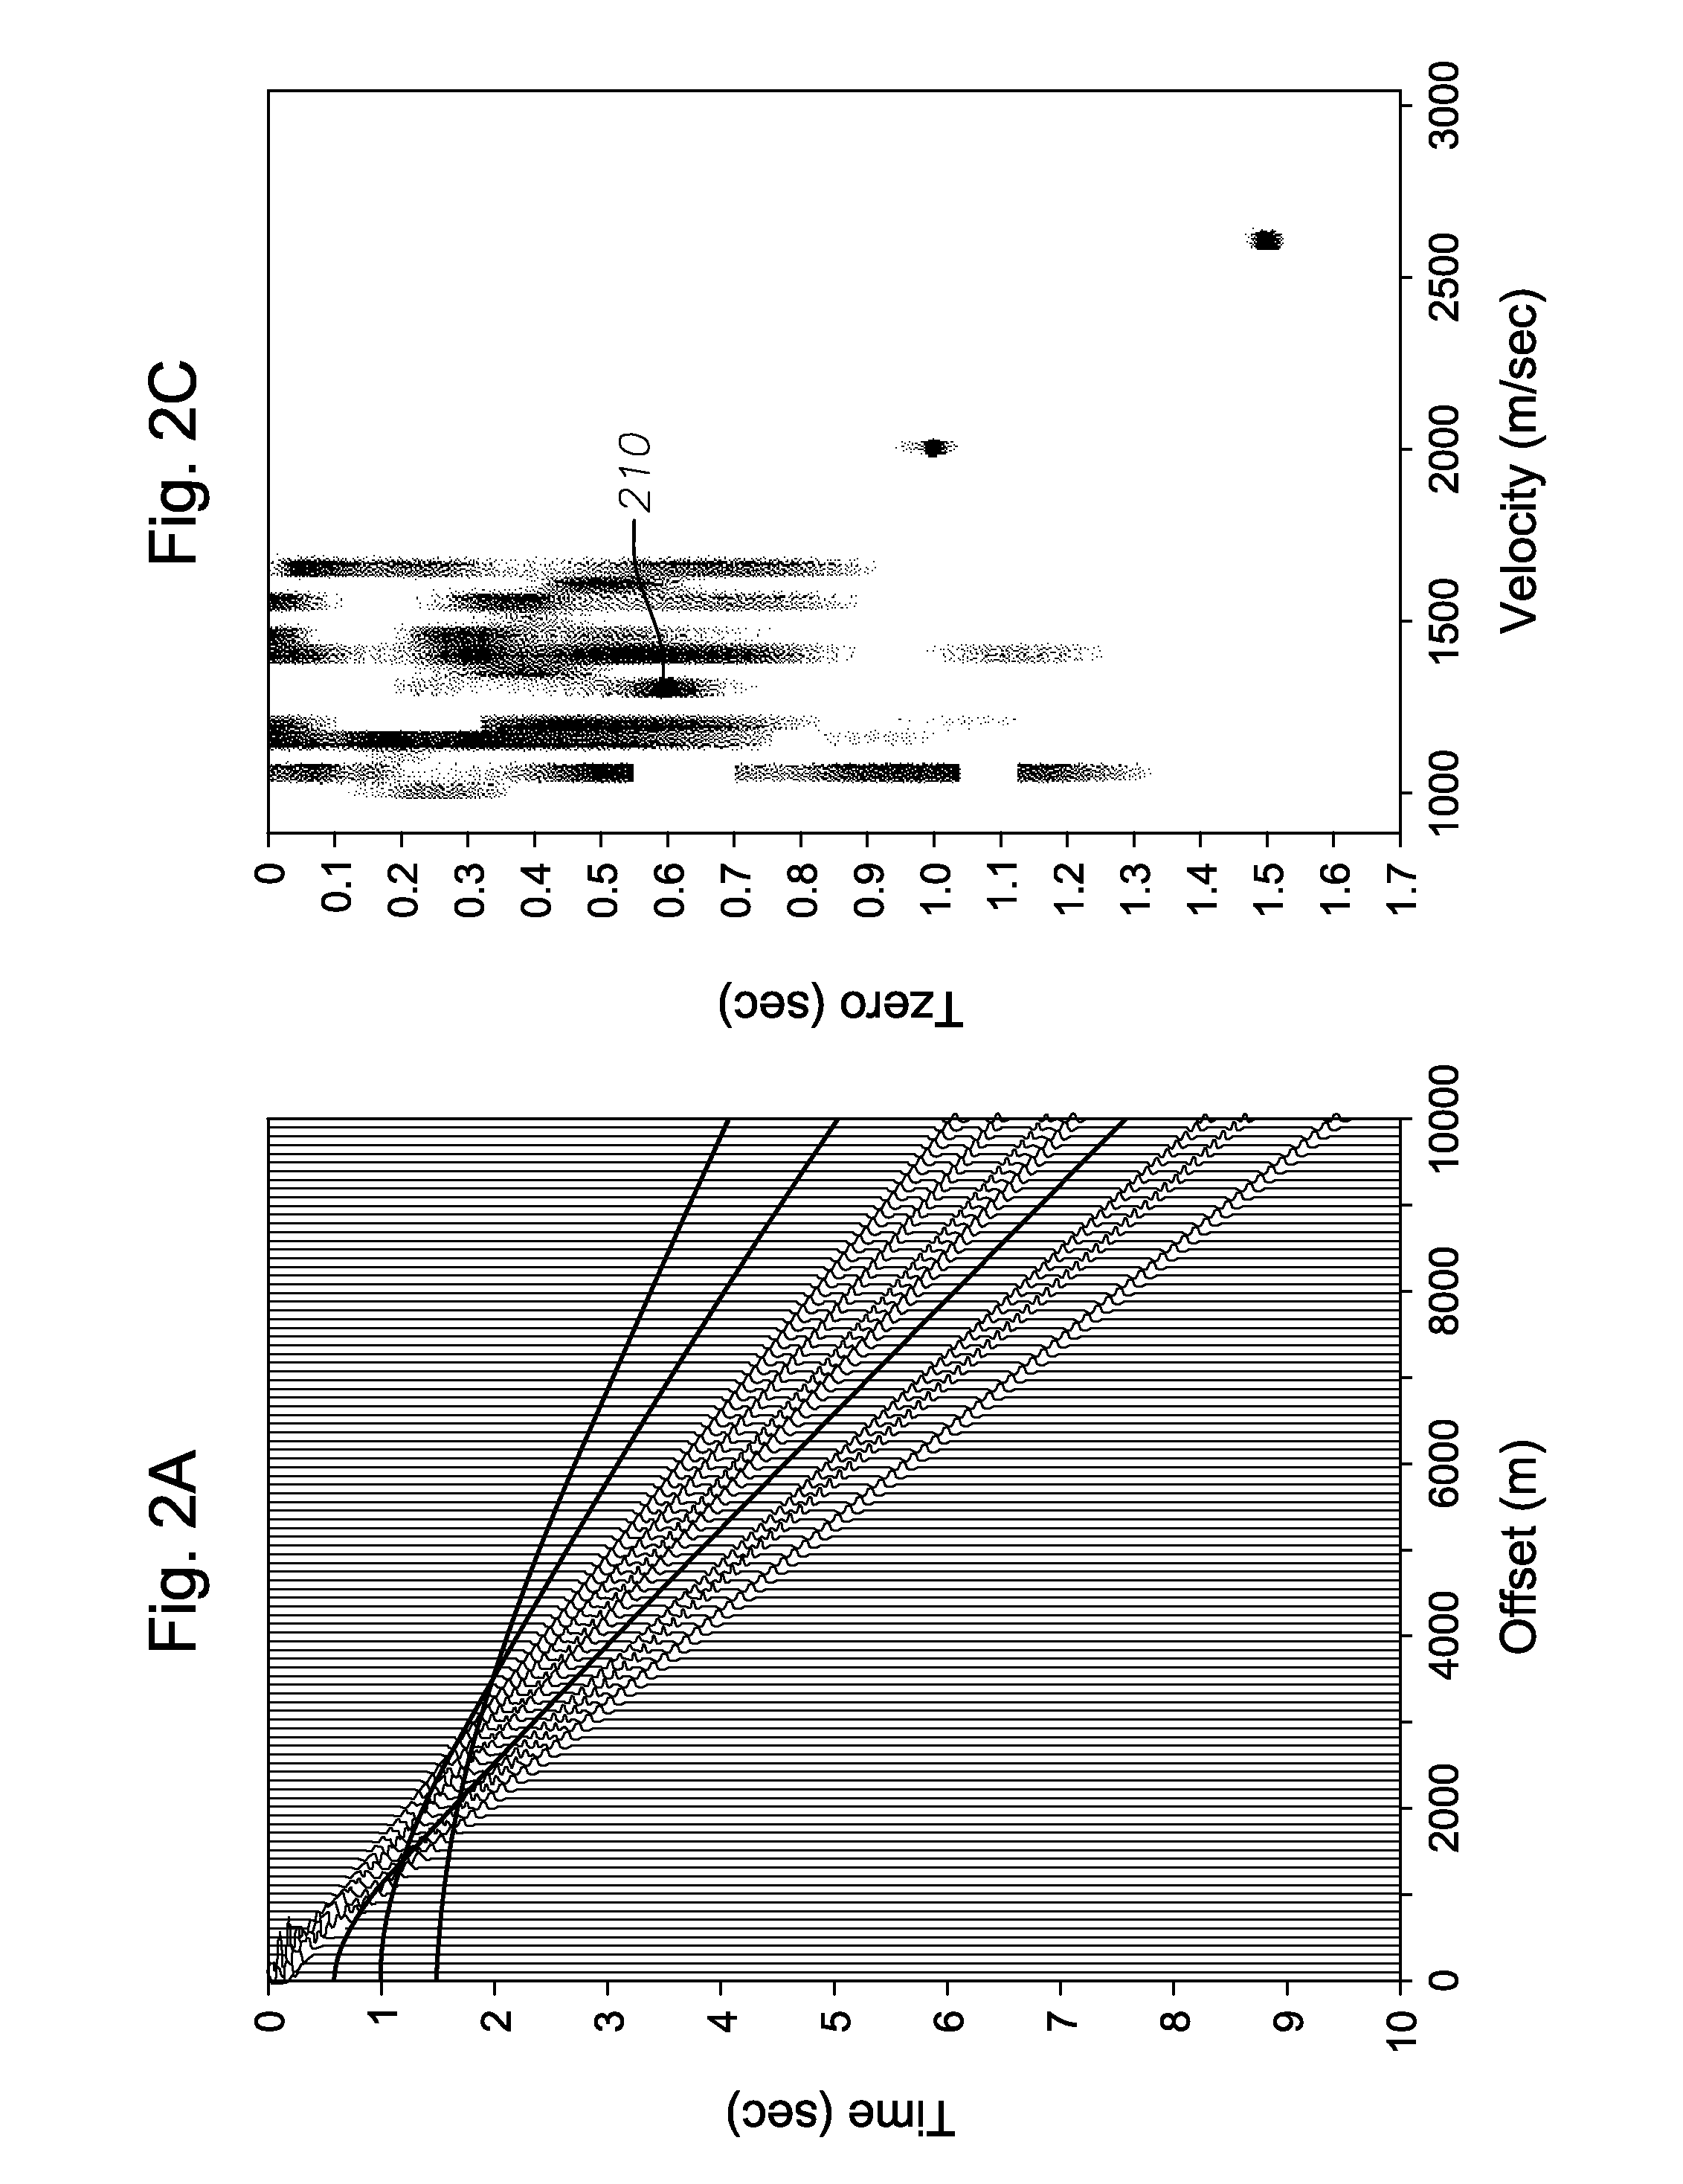 Processing seismic data using interferometry techniques